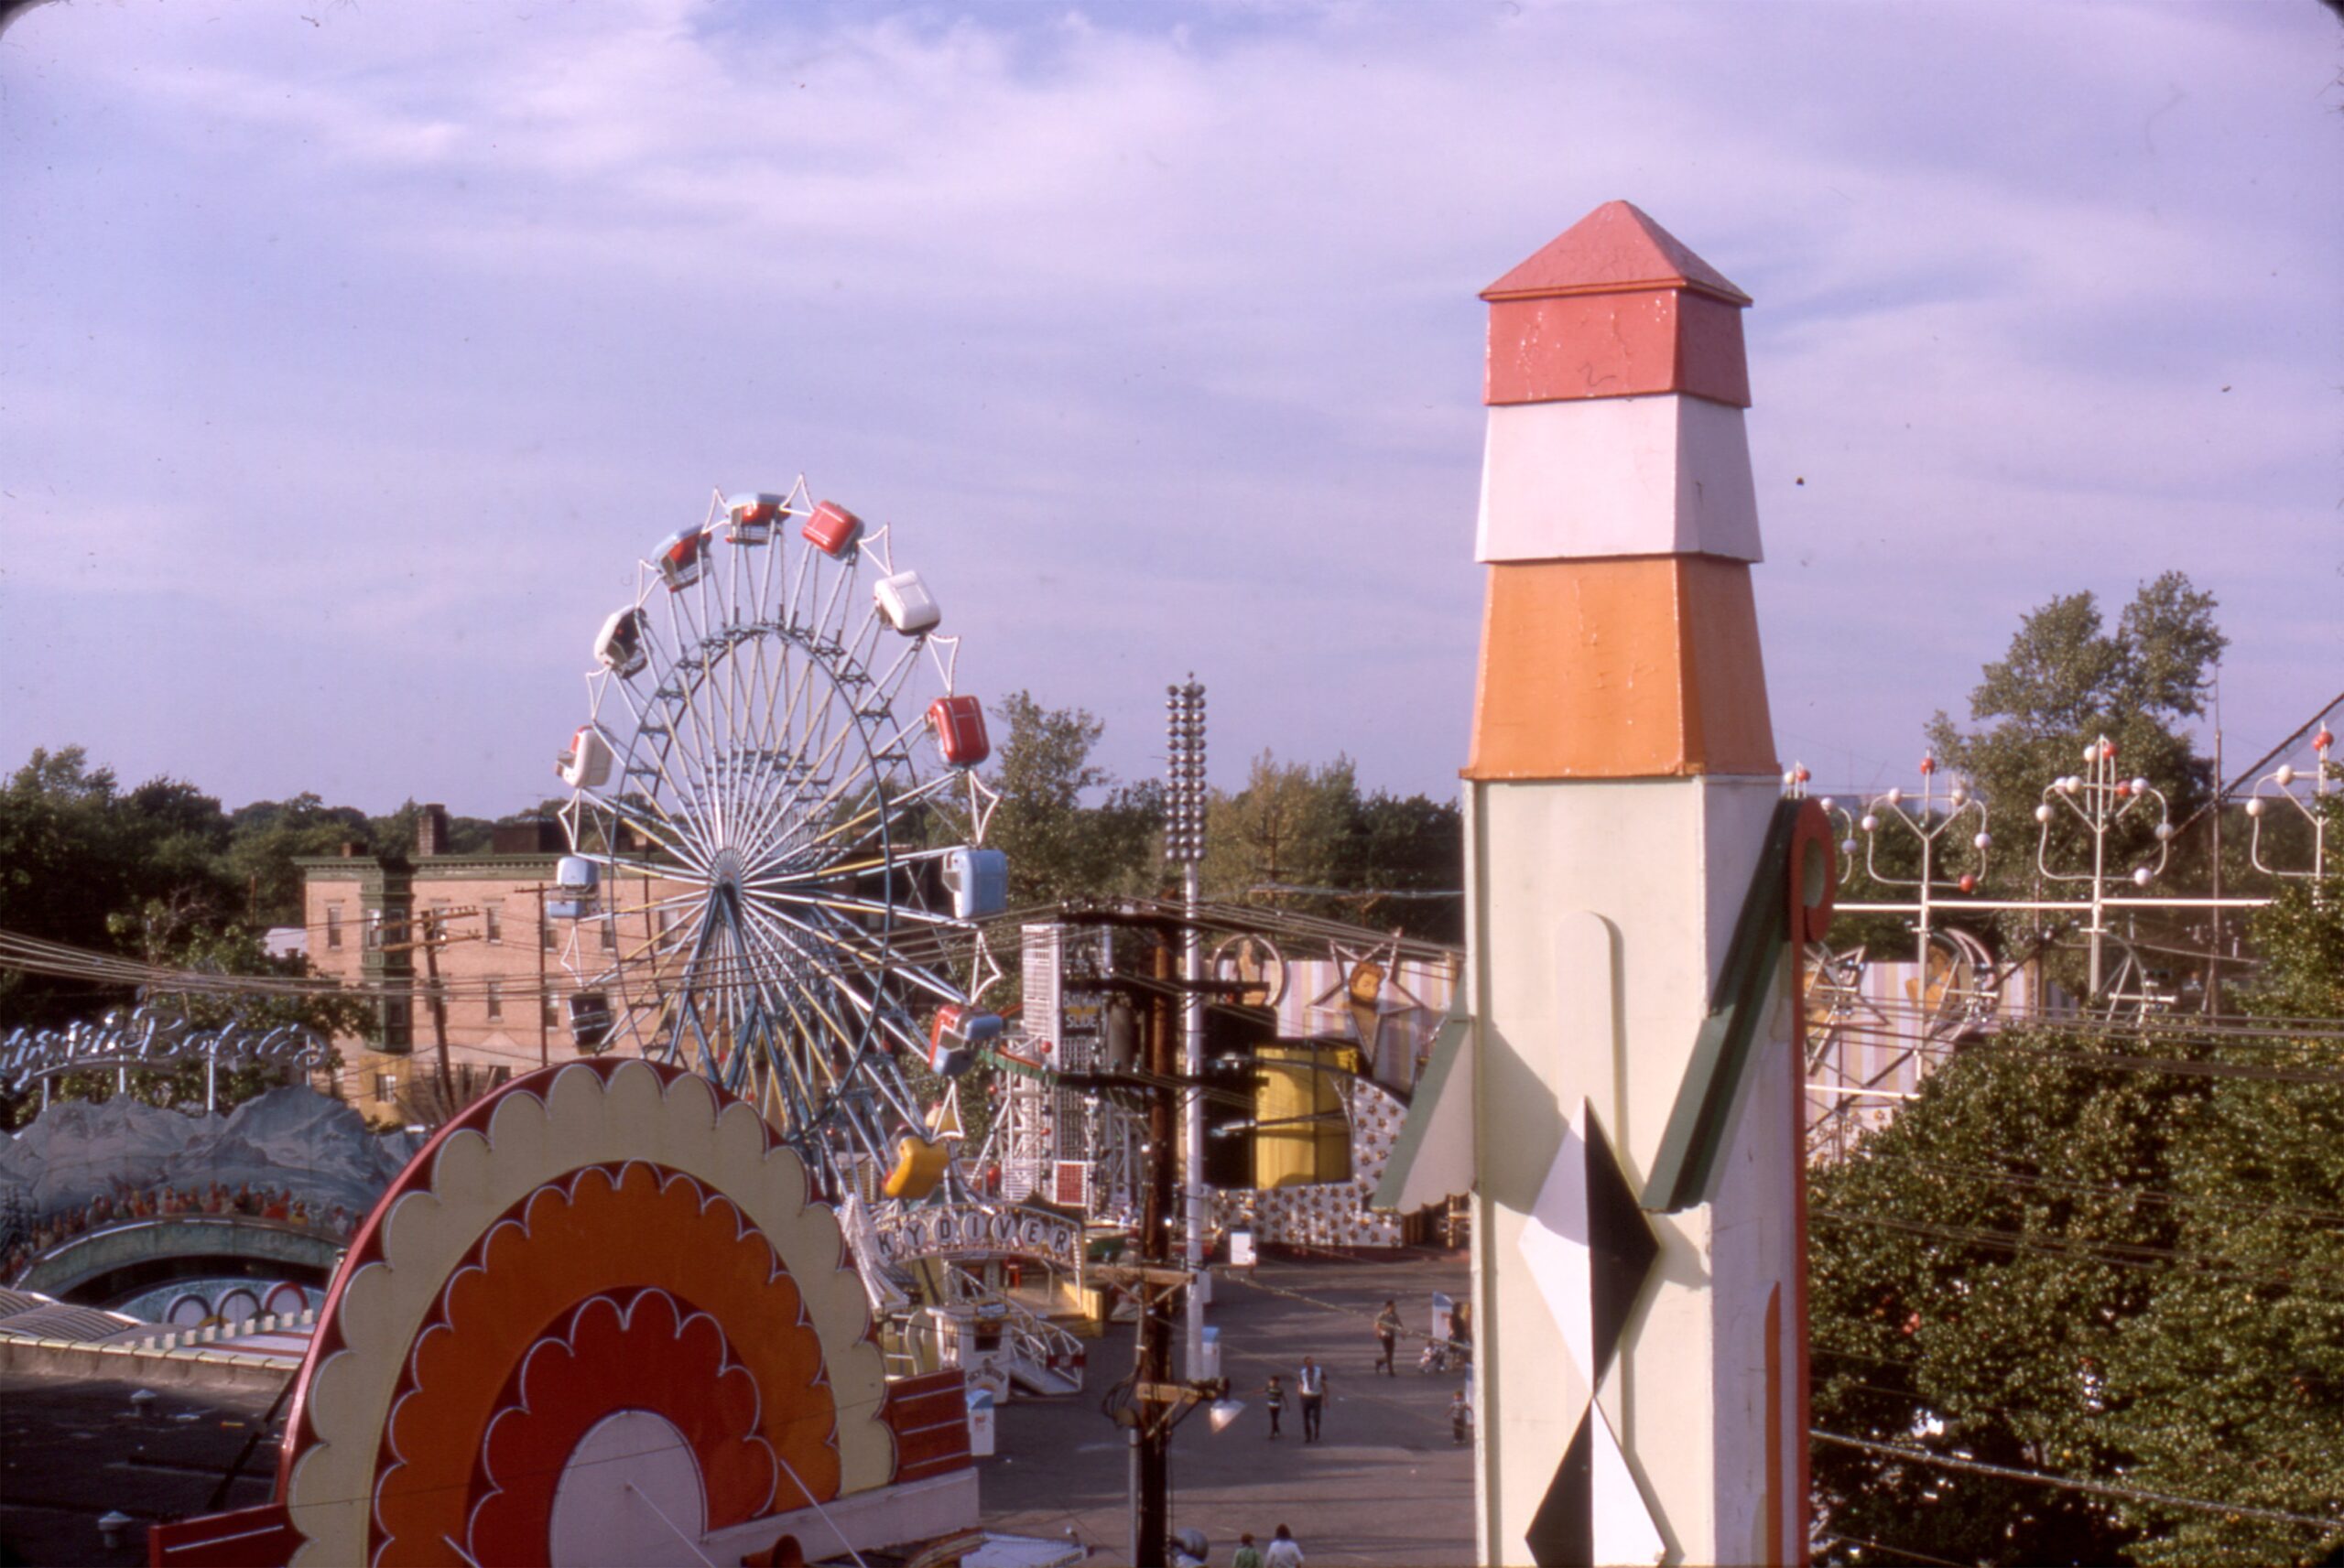 Palisades Amusement Park Ferris Wheel and tower